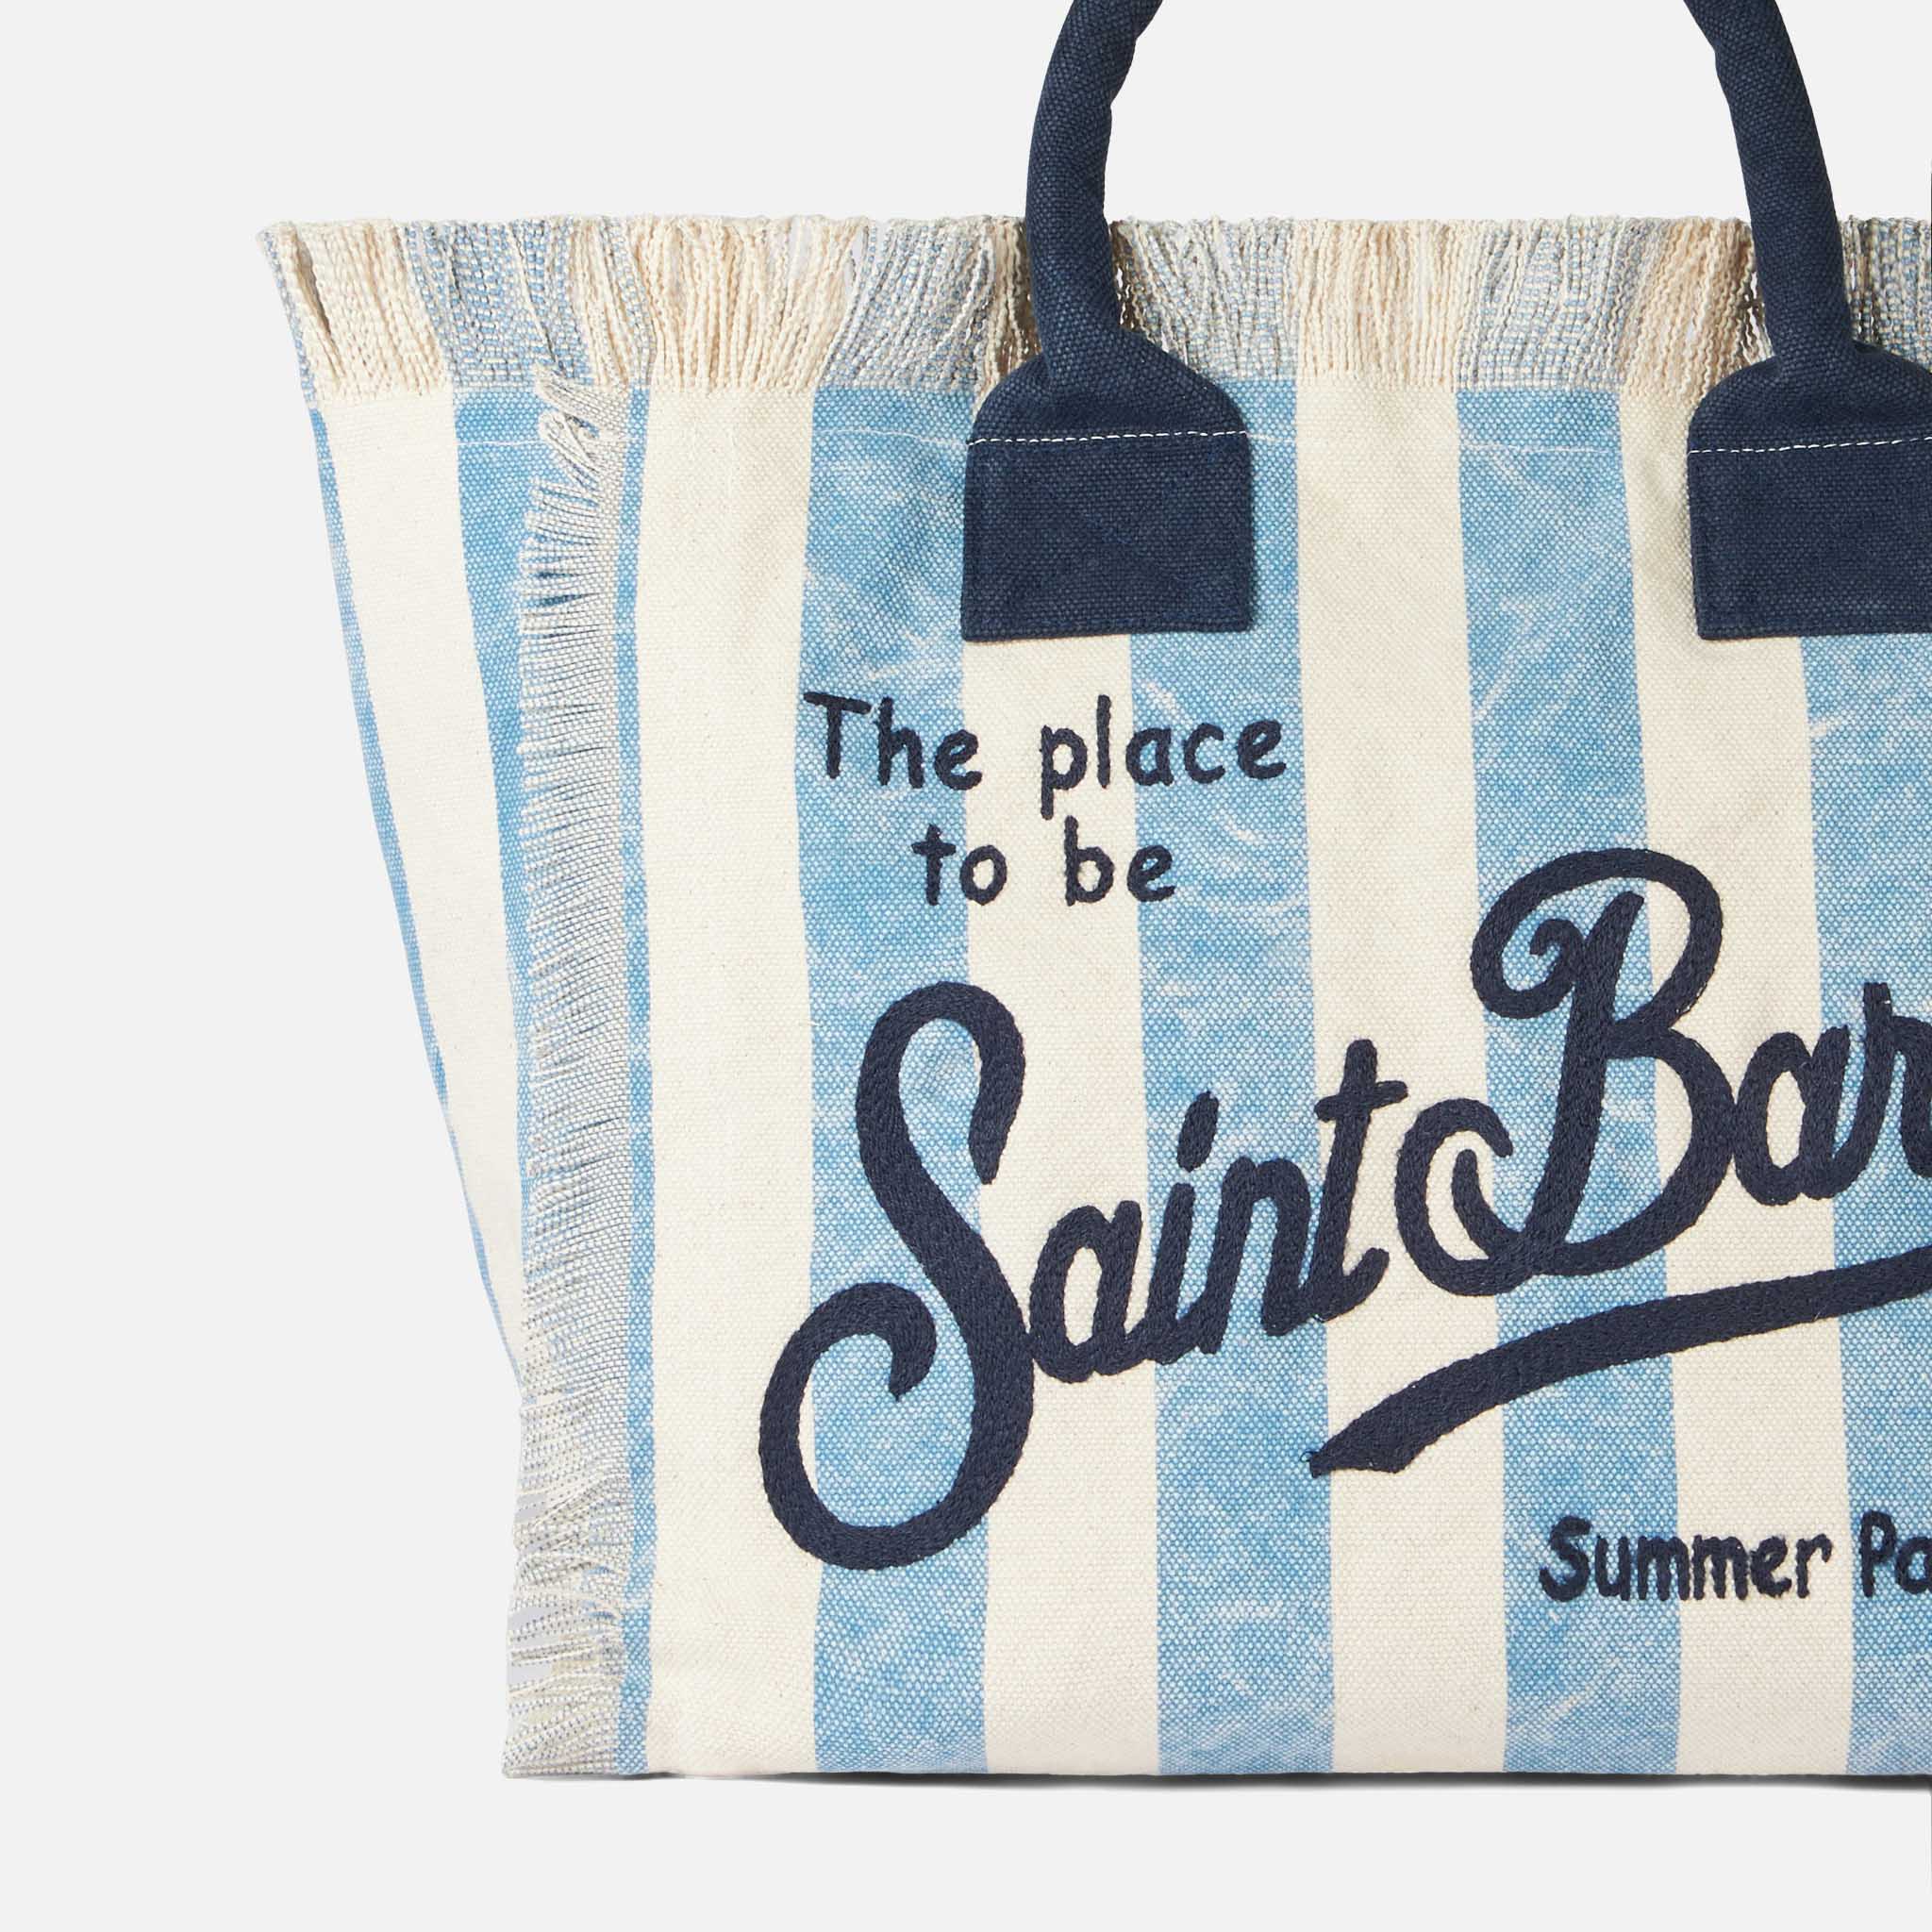 Vanity canvas shoulder bag with St. Barth patch – MC2 Saint Barth